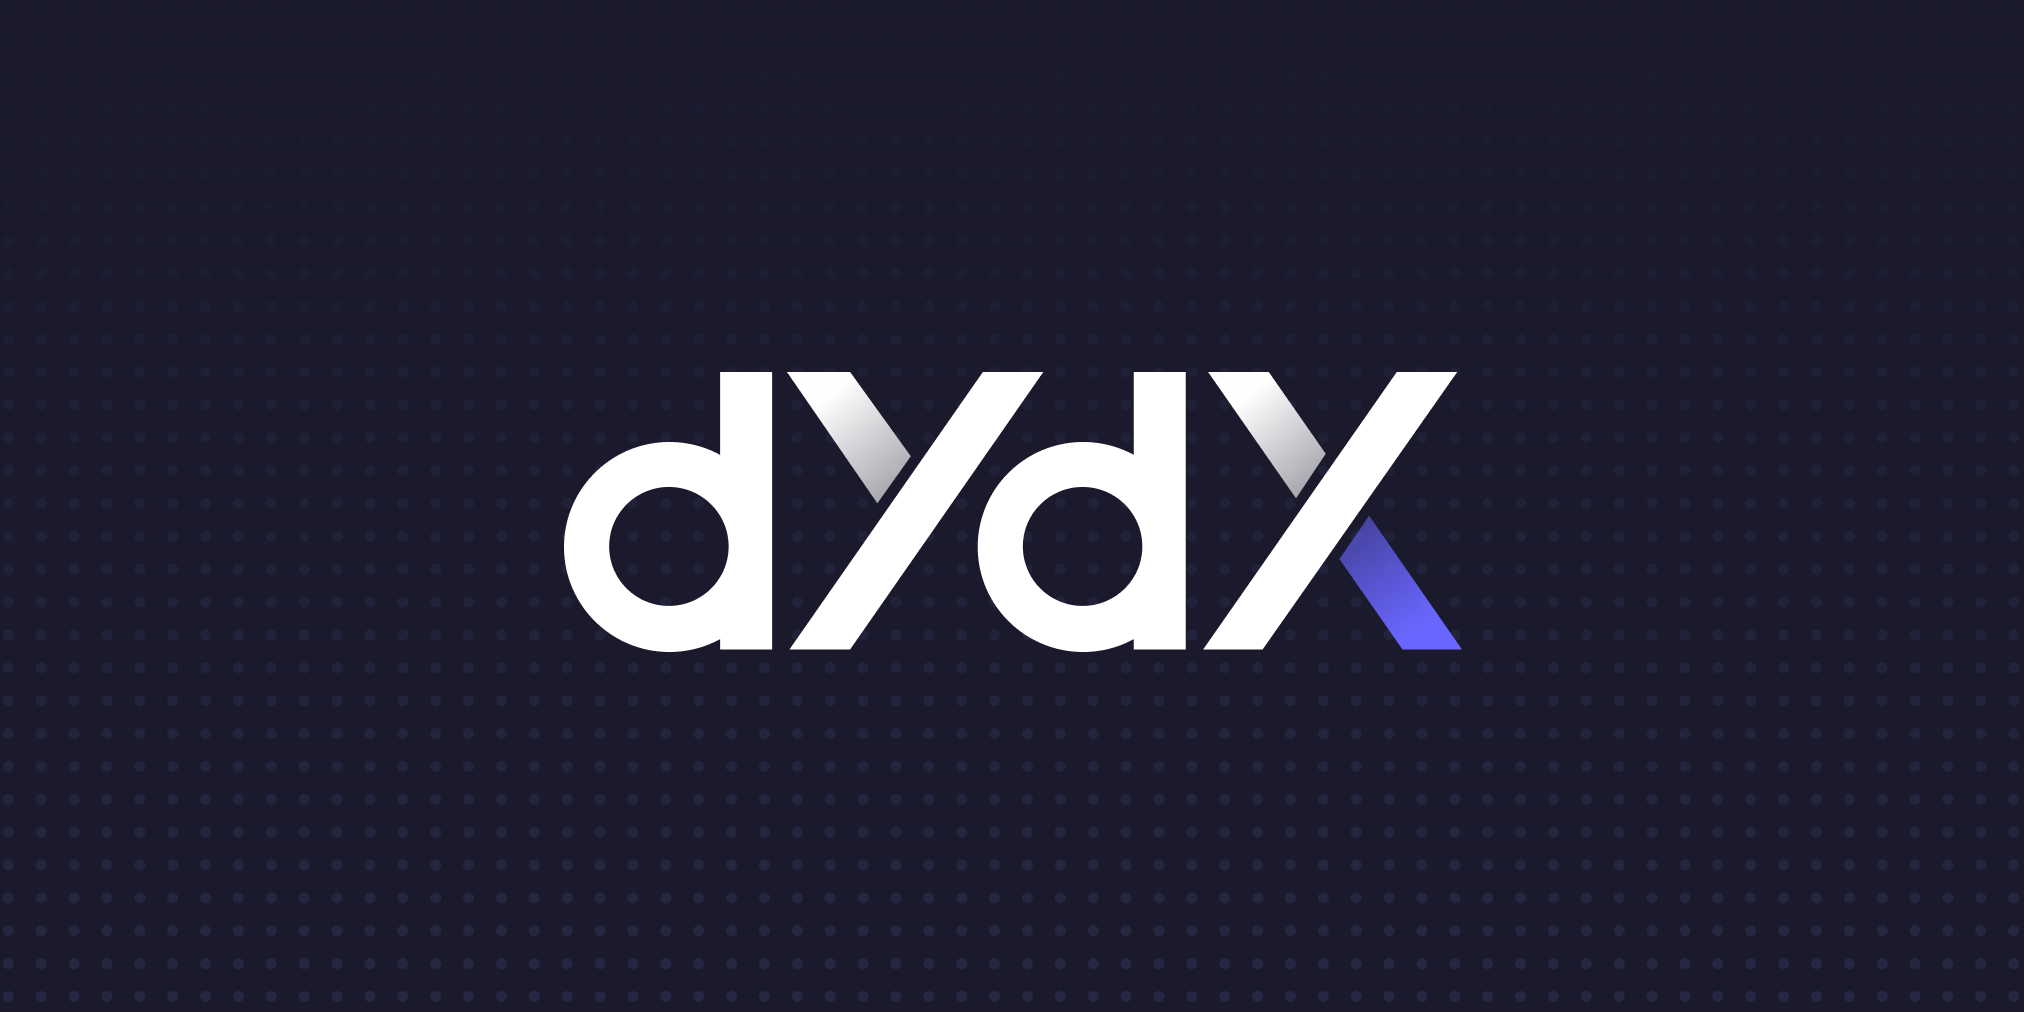 dydx_logo.png